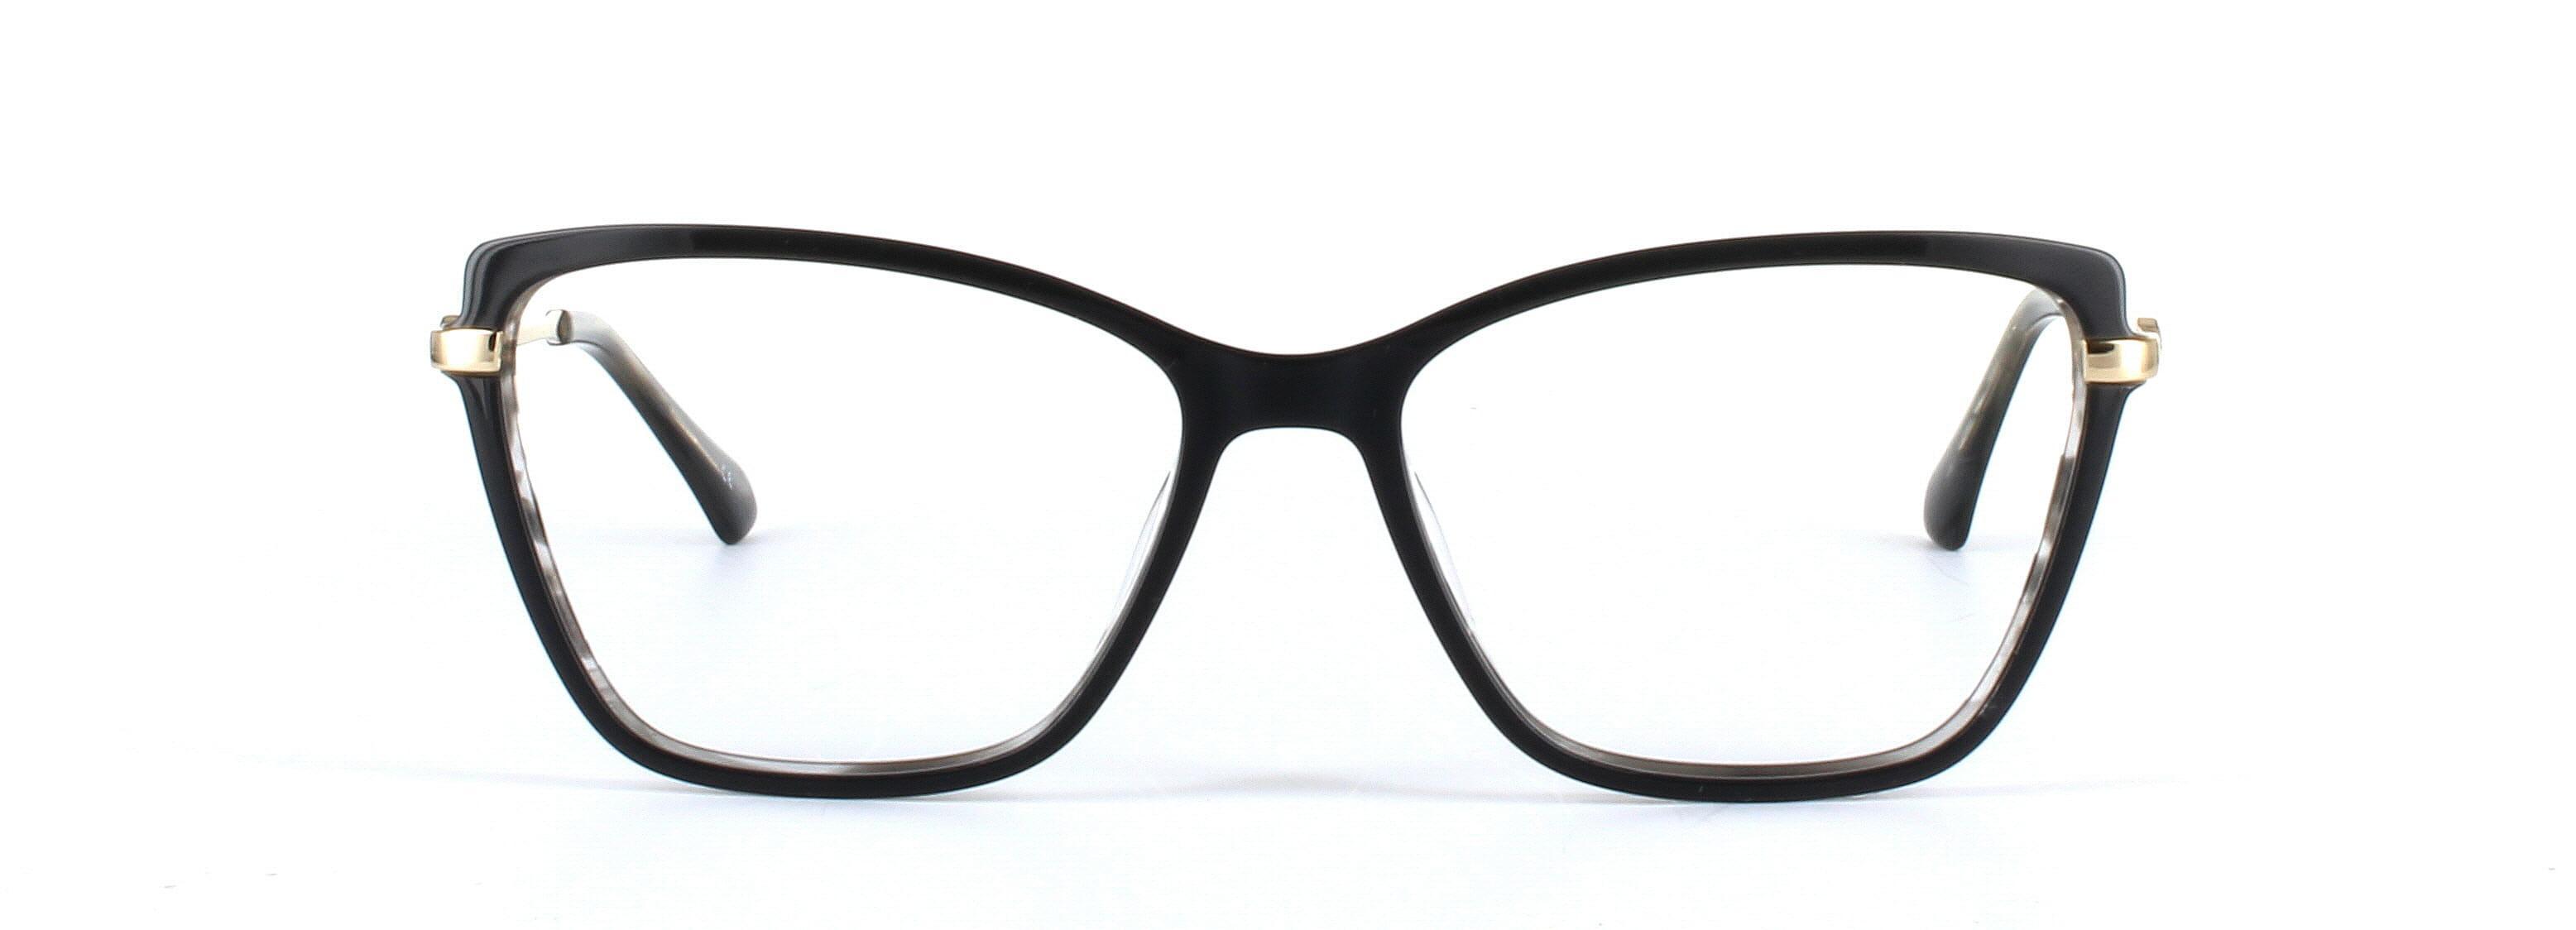 Jeanine Grey Full Rim Acetate Glasses - Image View 5